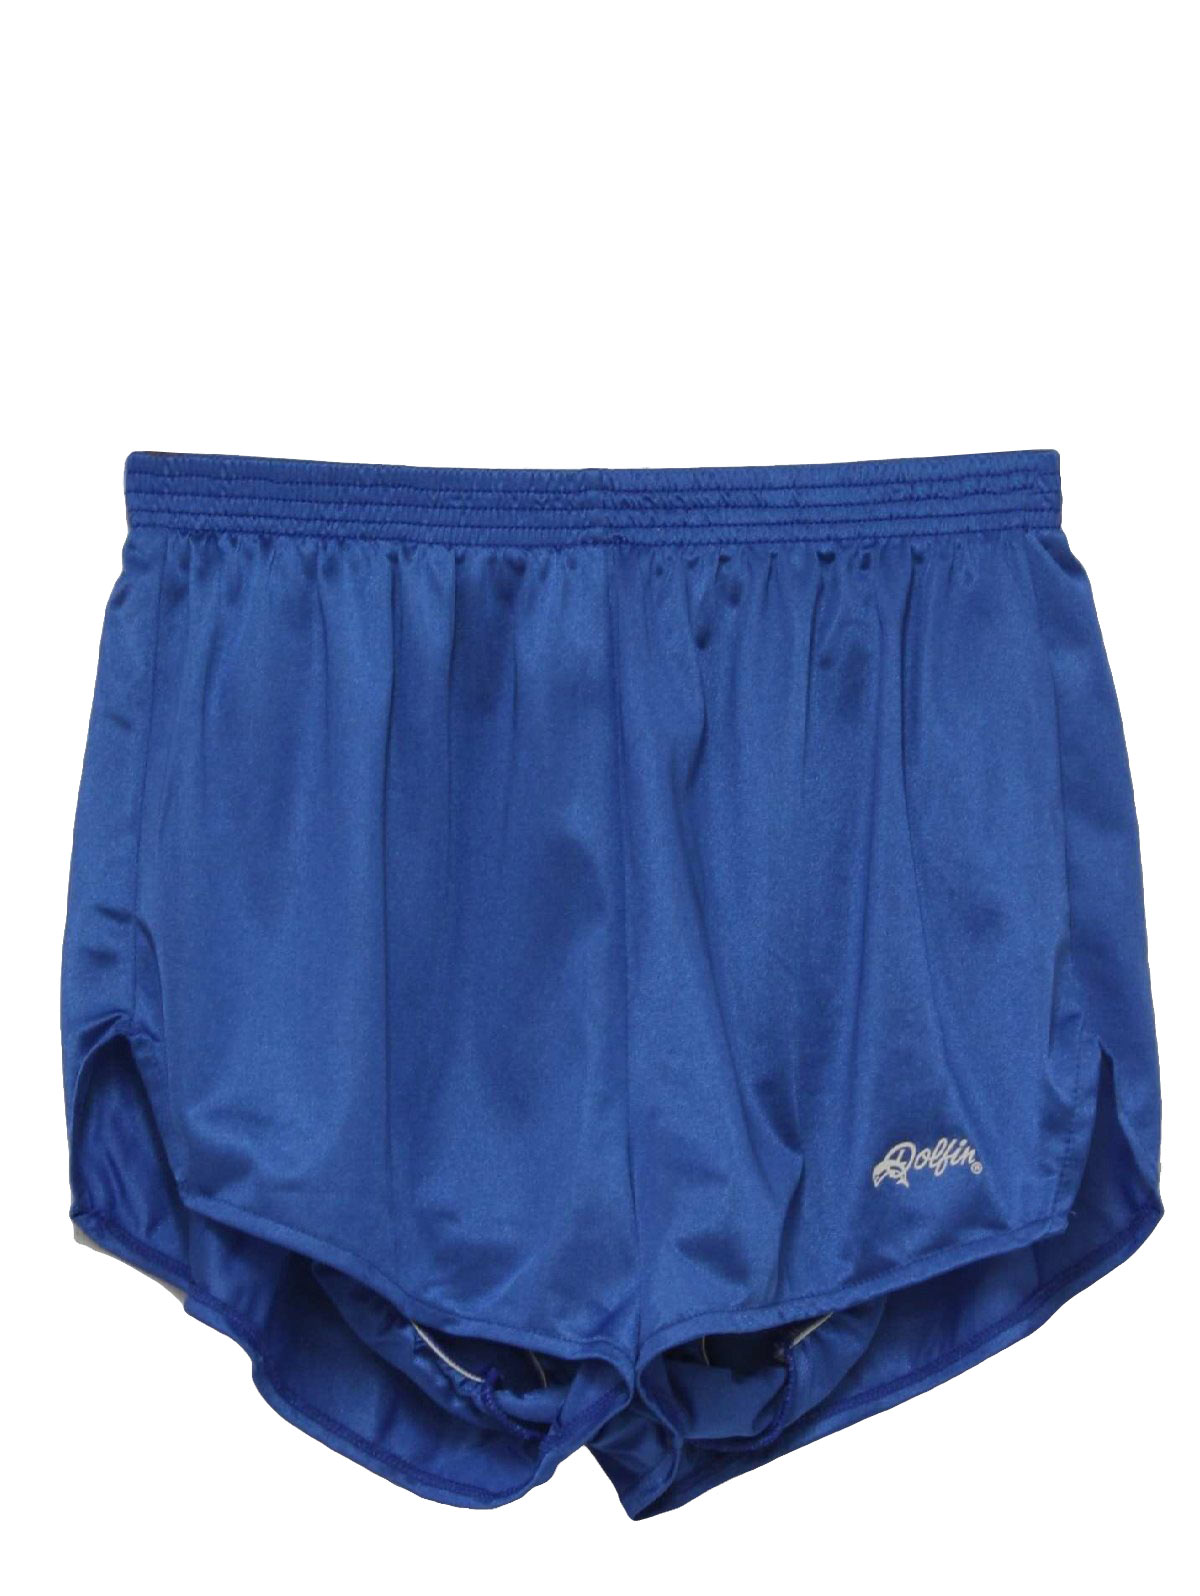 80's Vintage Shorts: 80s -Dolphin- Womens sheeny blue nylon running ...